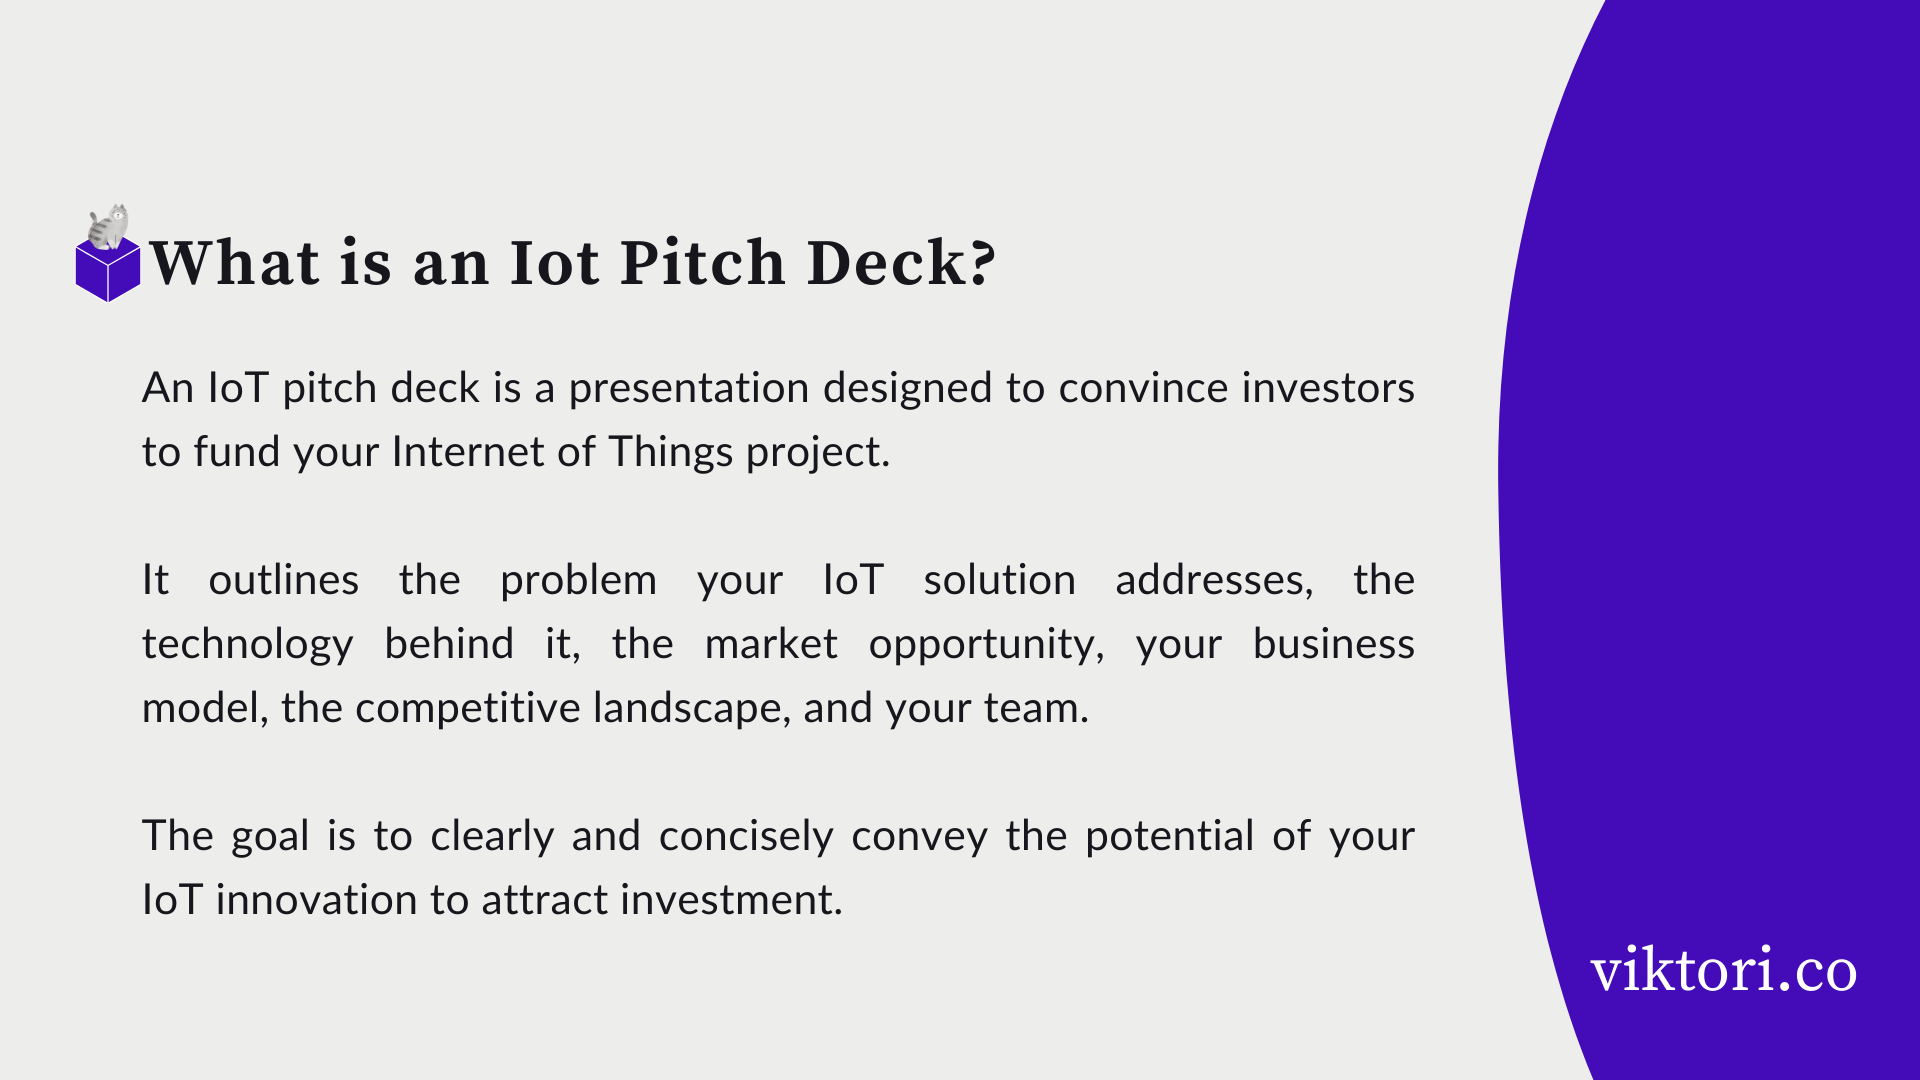 iot pitch deck definition